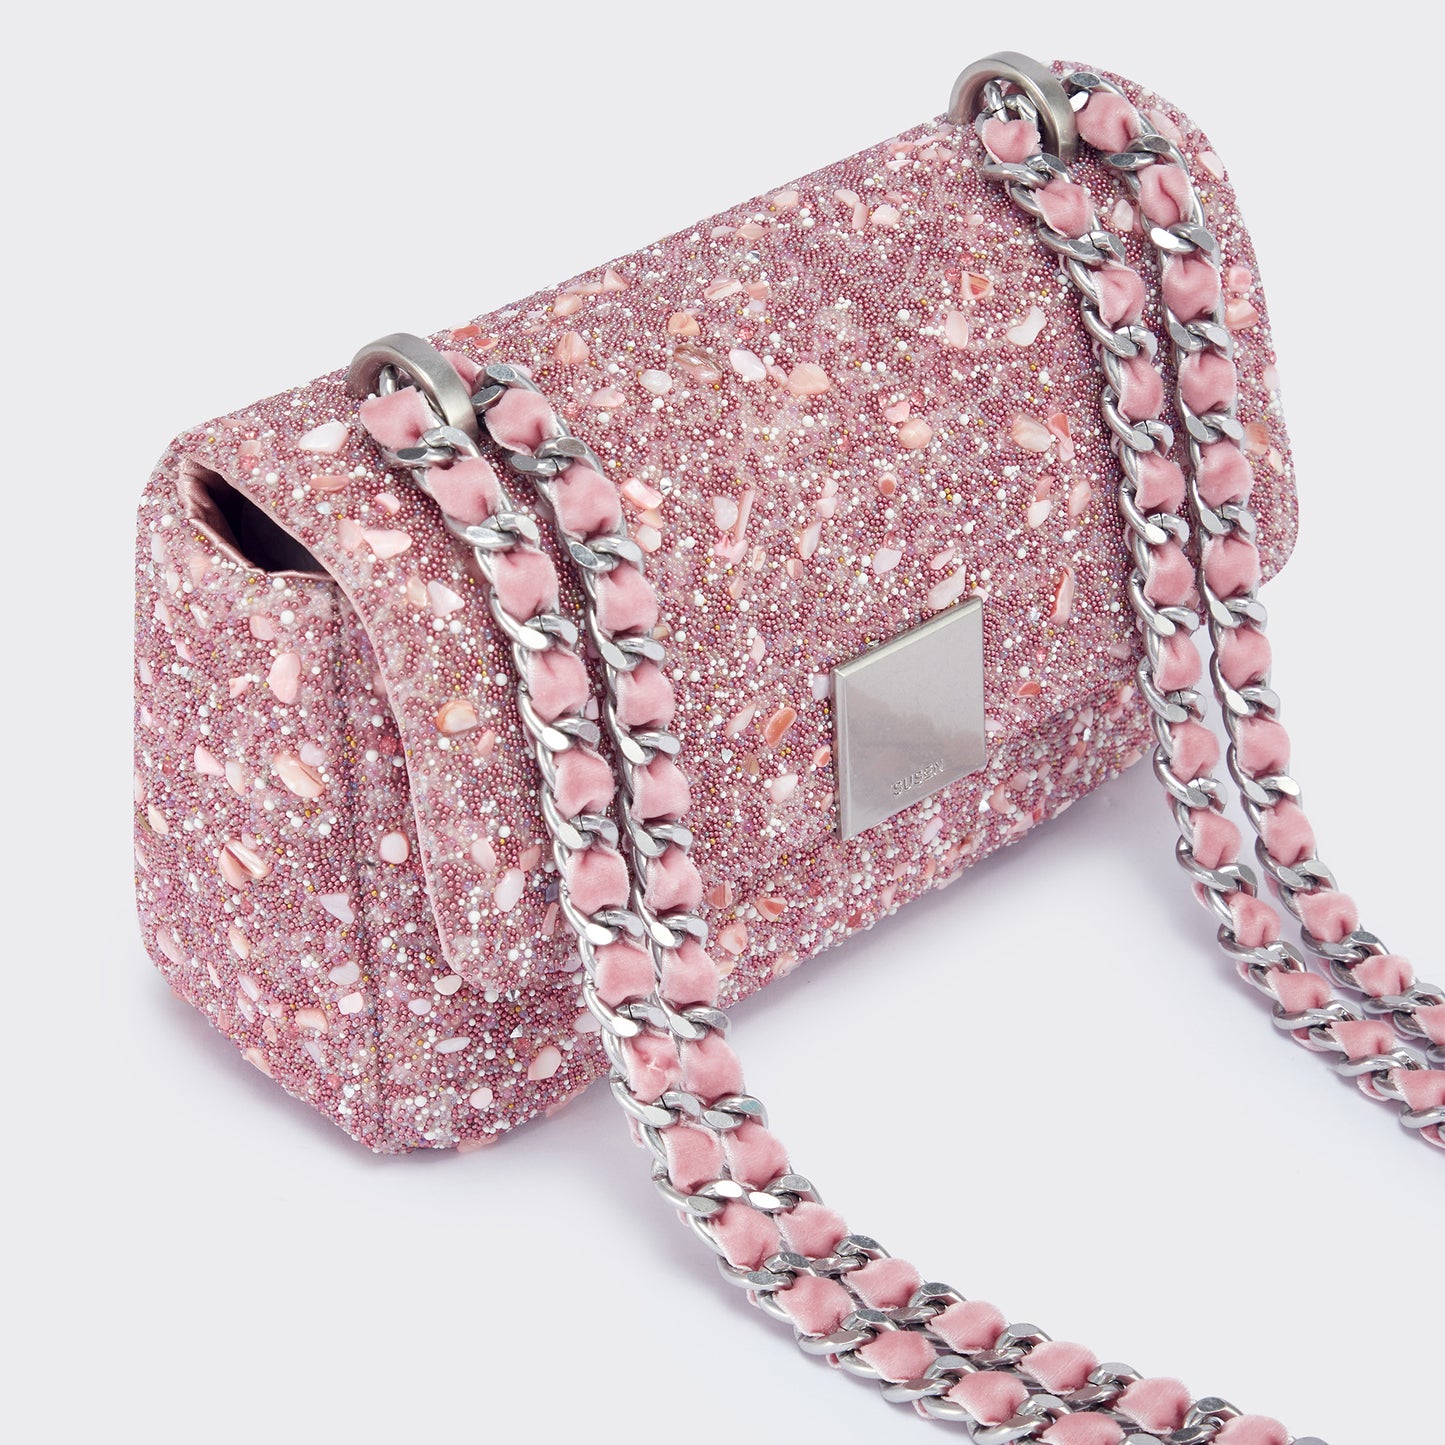 Star Diamond Pack - Pink